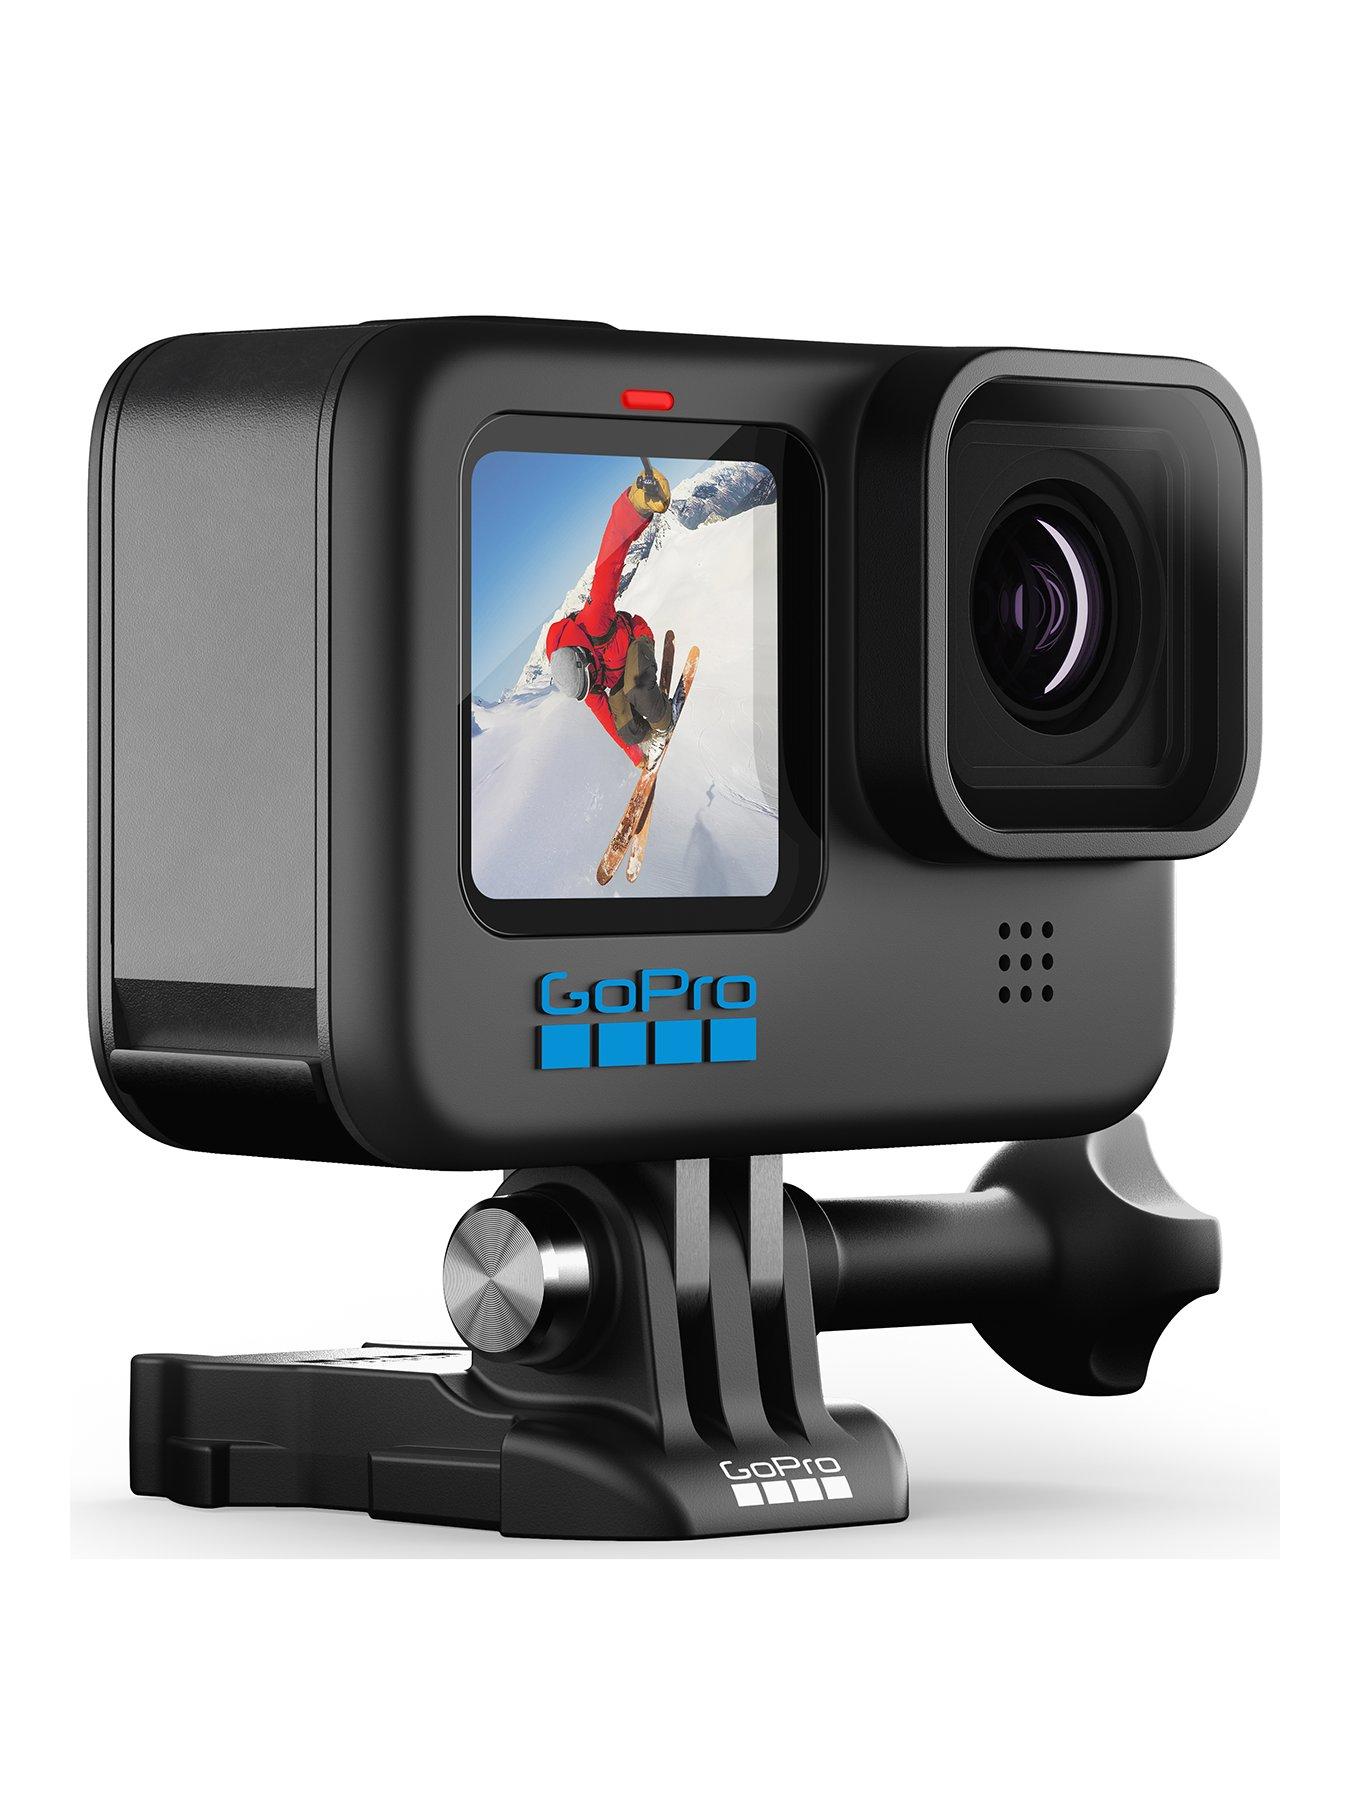 The GoPro Hero 12 Black has landed – we explain the 5 pro-focused upgrades